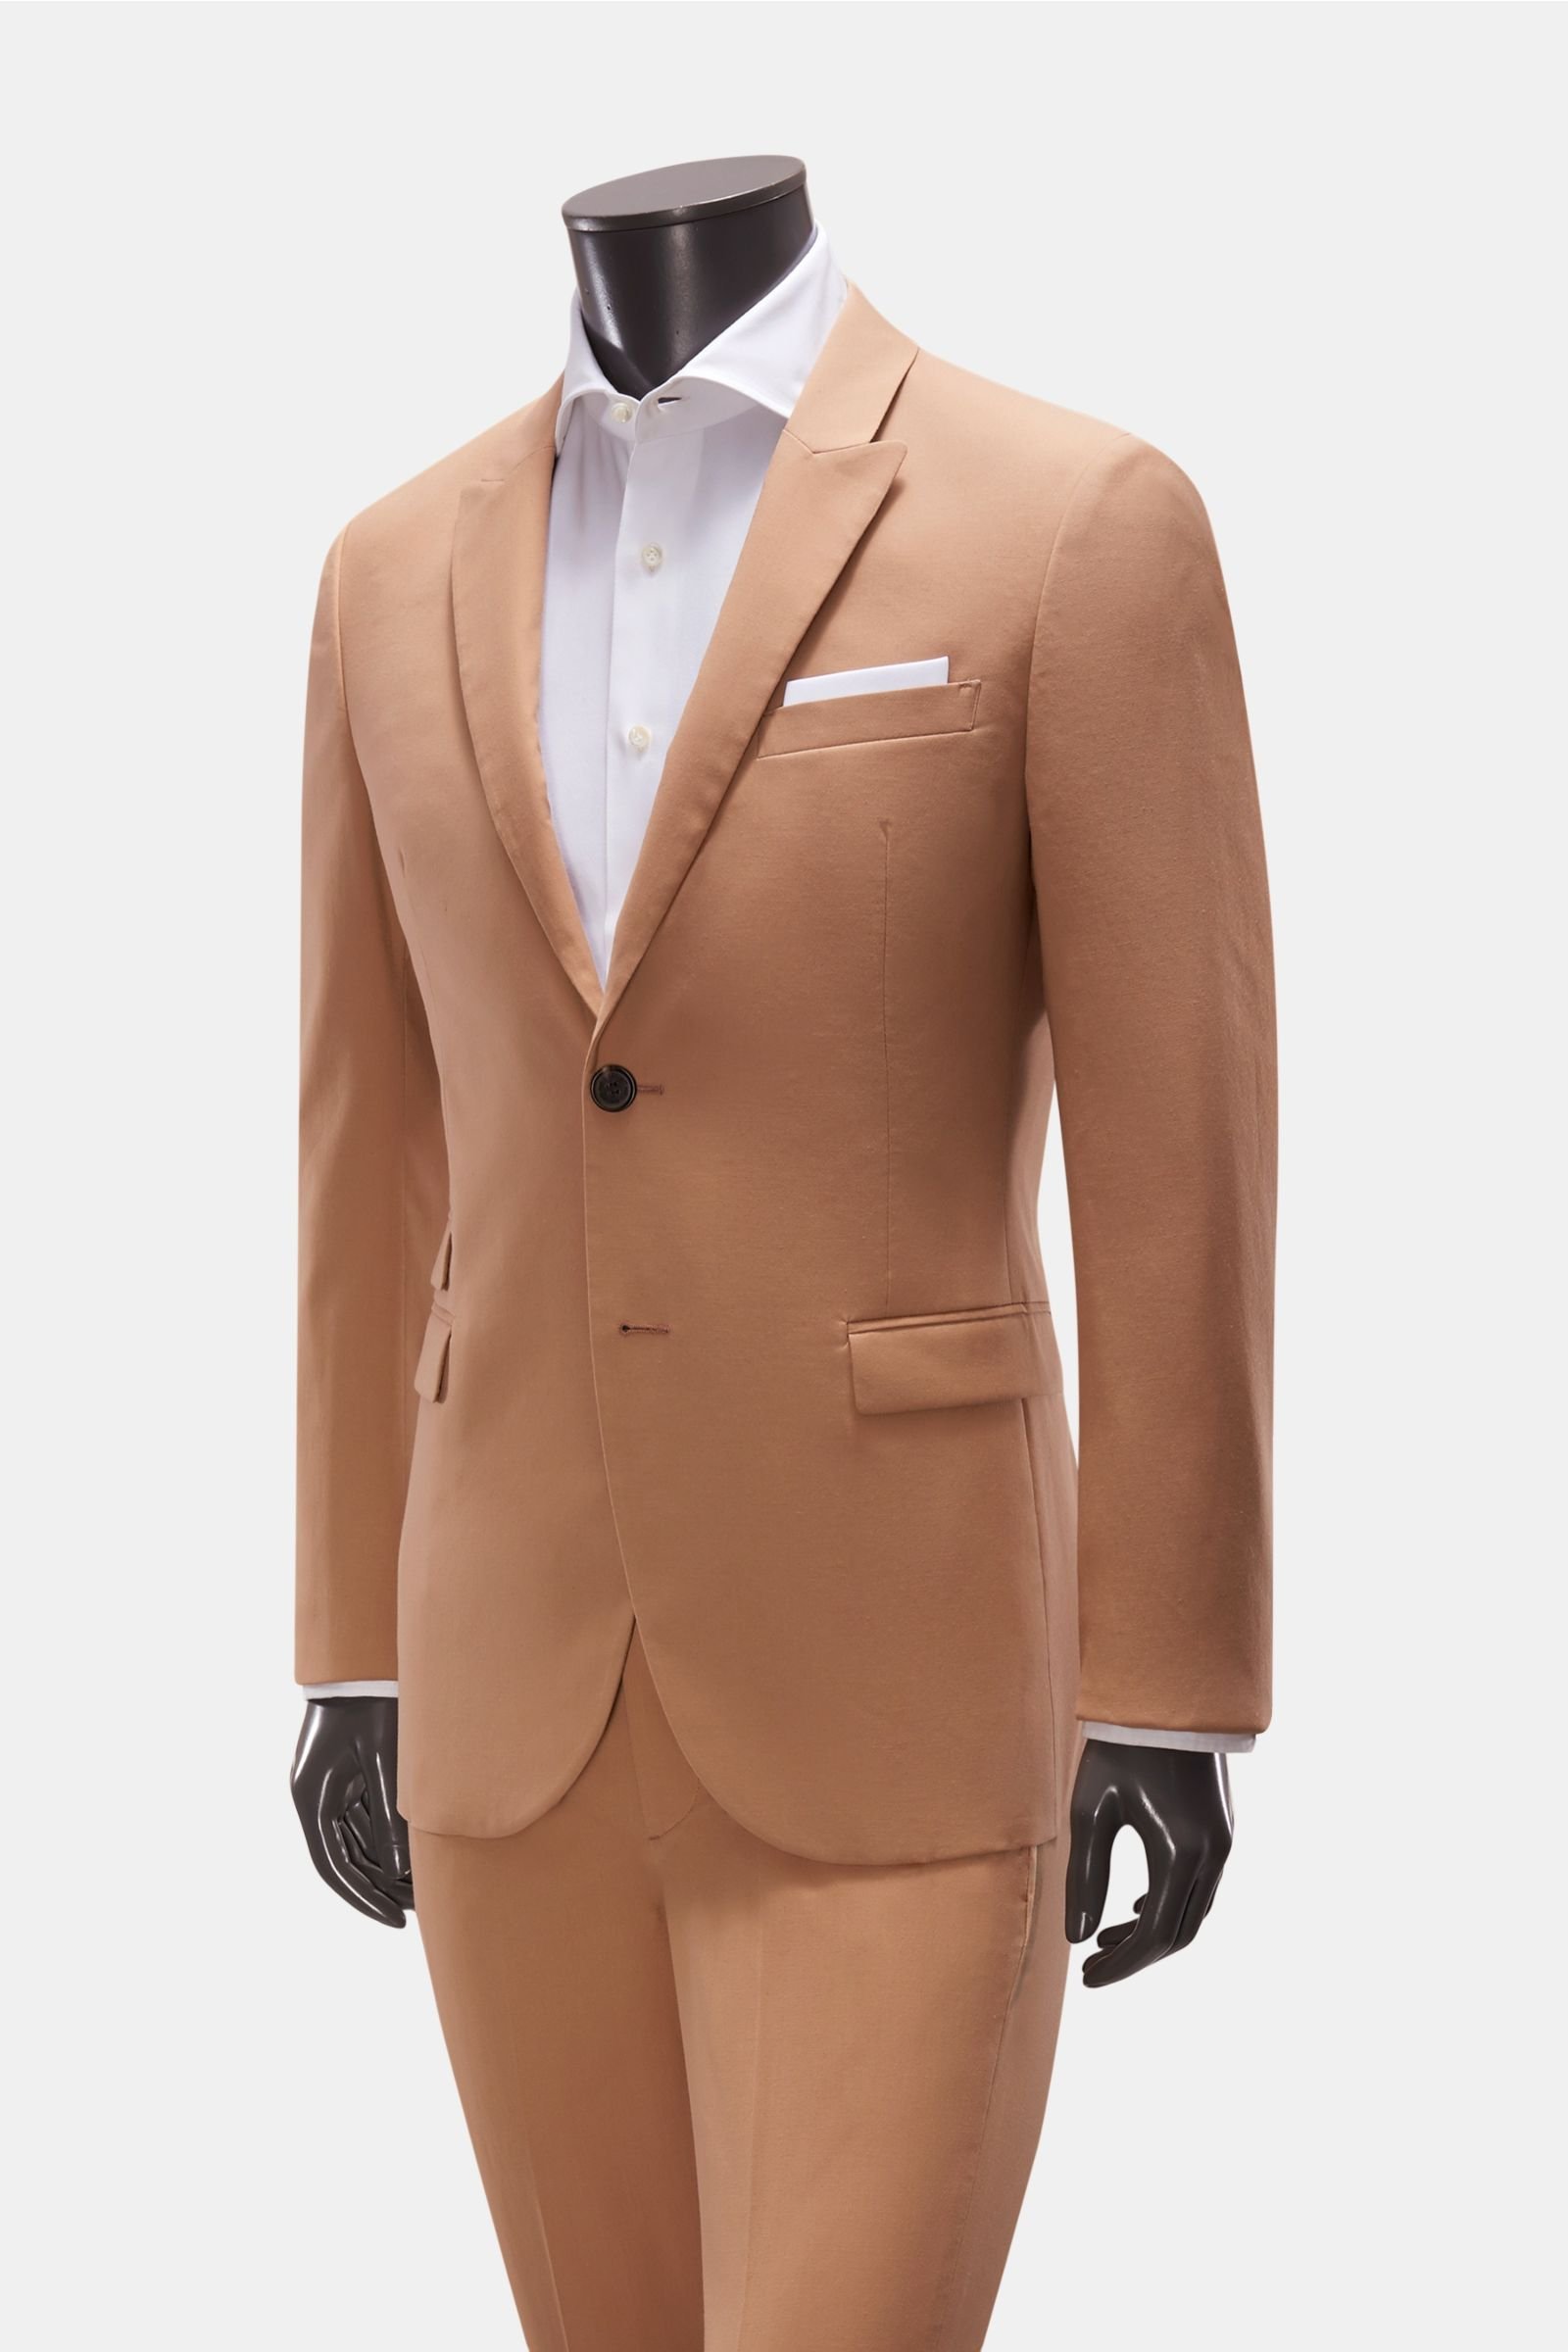 Suit light brown